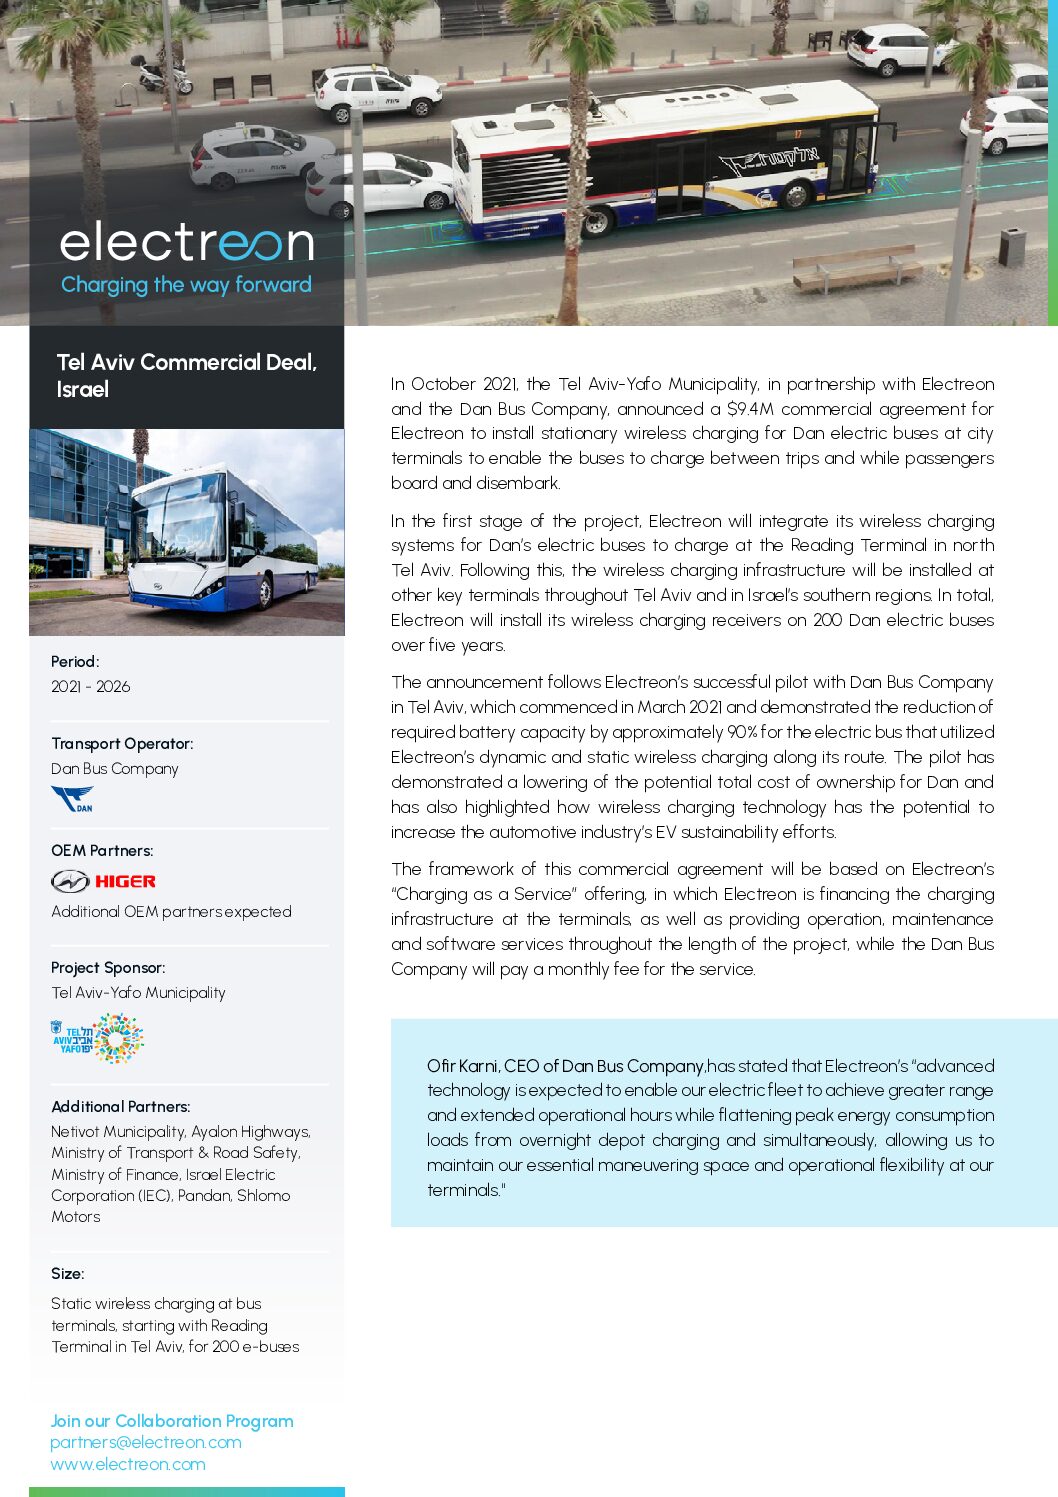 Electreon: Tel Aviv Commercial Deal, Israel